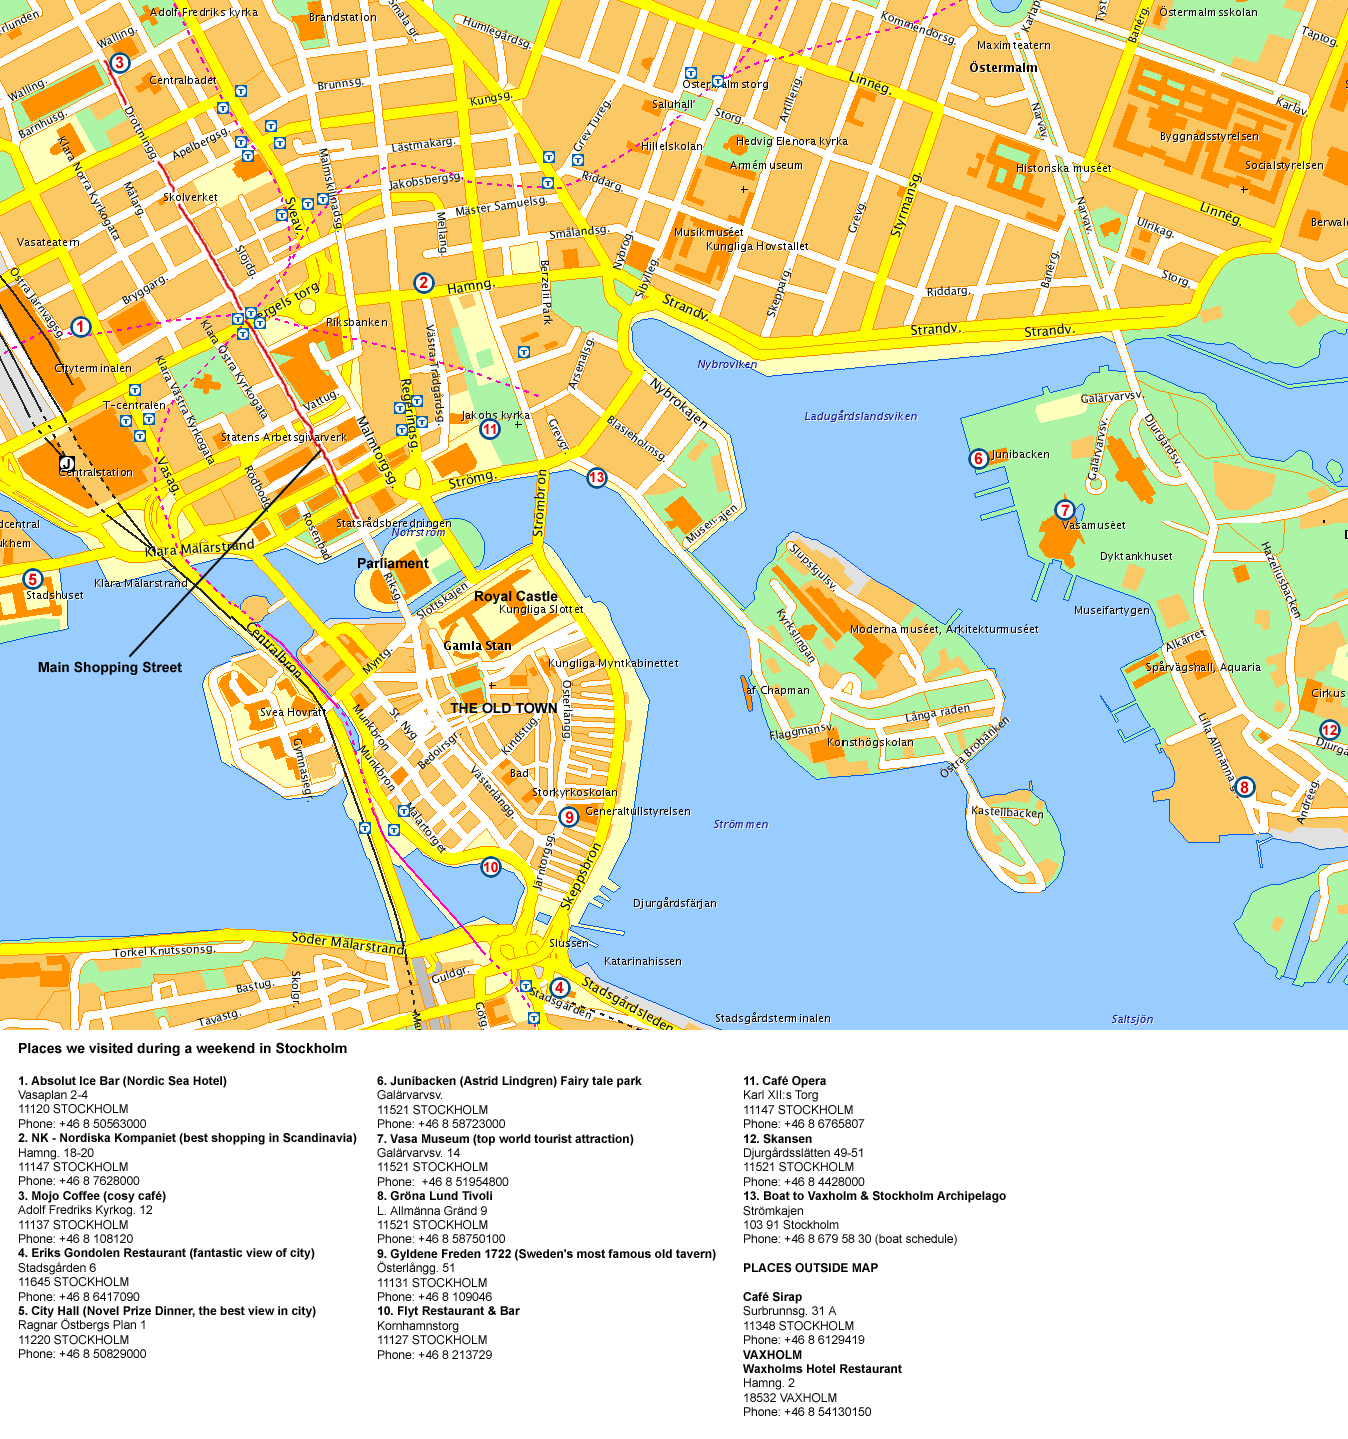 map of stockholm 2 Map of Stockholm